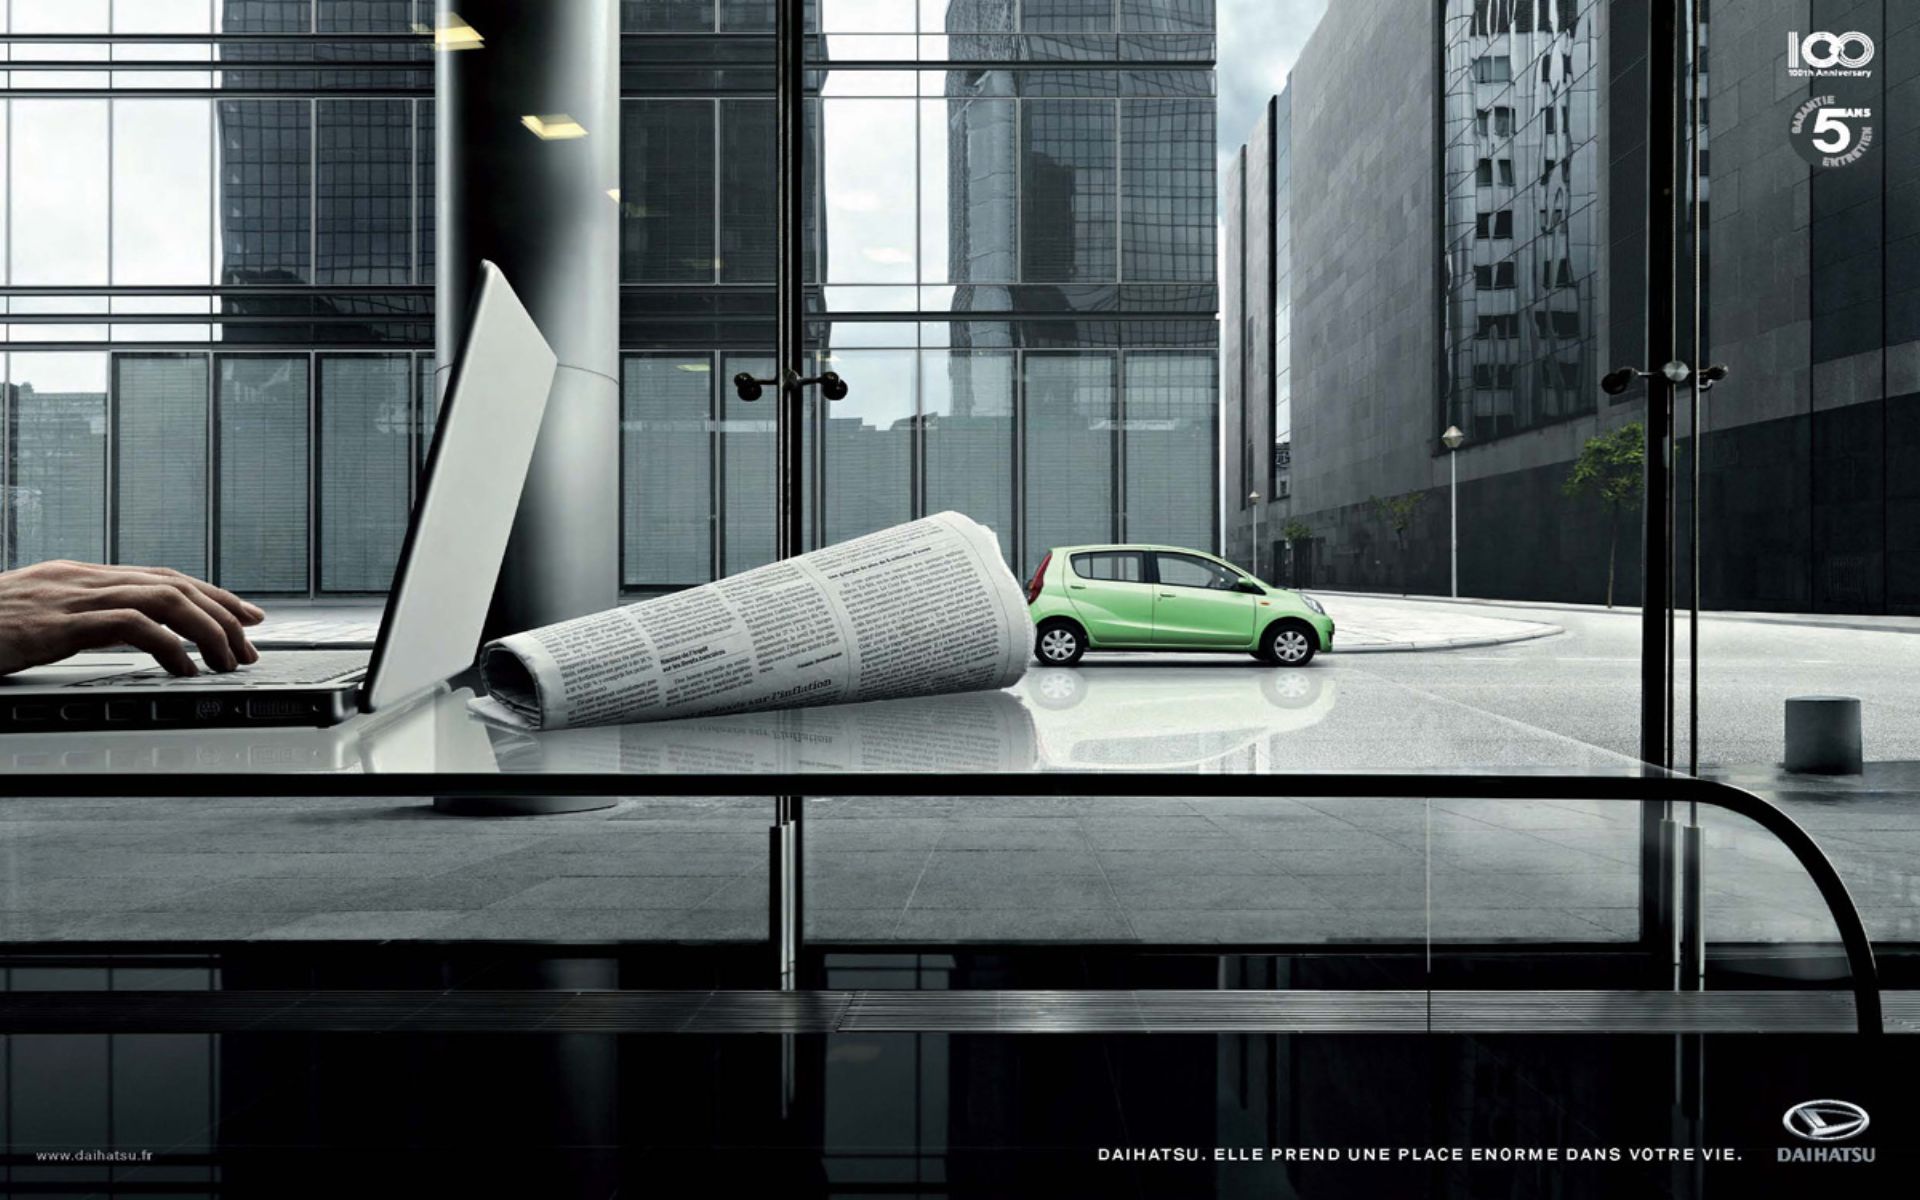 Allow ads. Креативная реклама страхования. Креативная реклама автострахования. Креативная реклама автомобилей. Креативная реклама страховой компании.